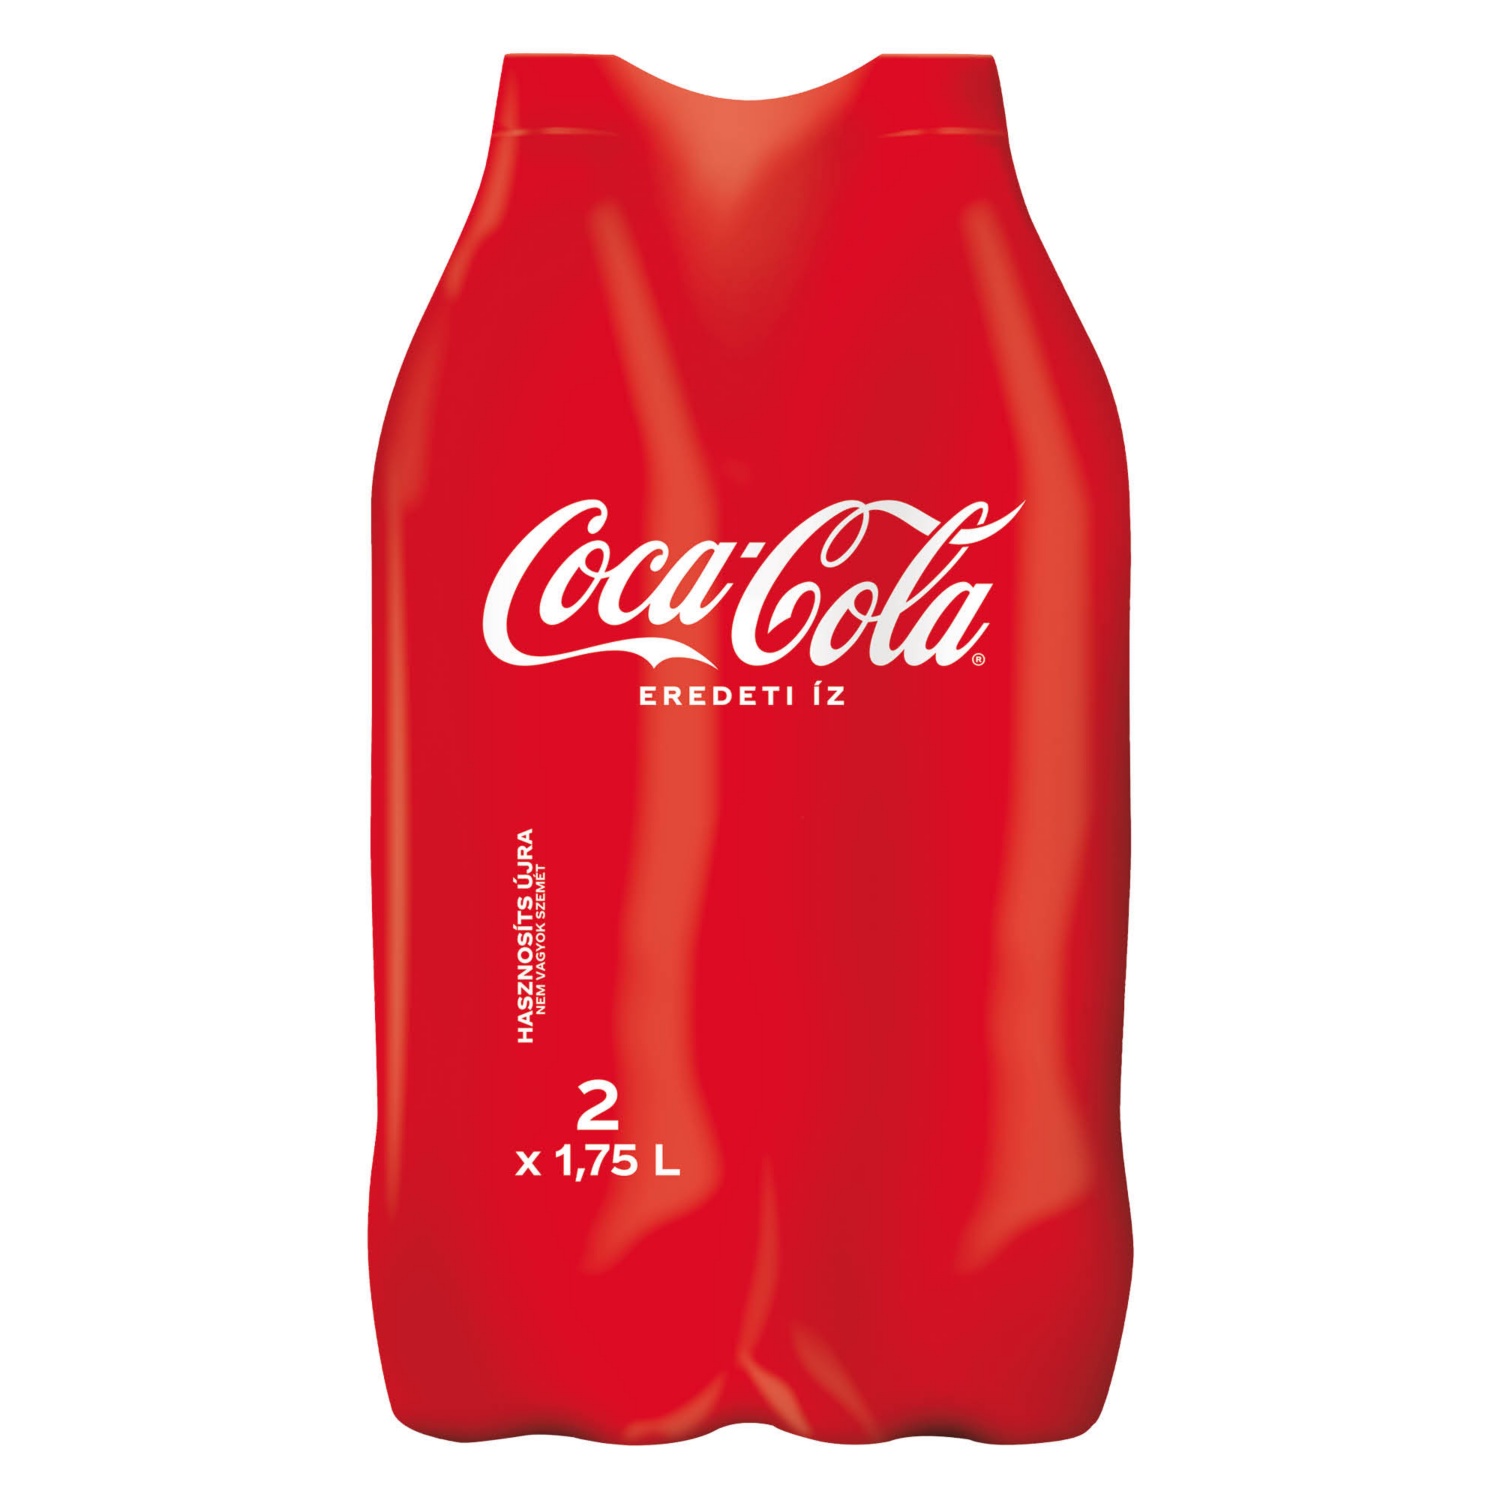 COCA-COLA Szénsavas üdítőital, 2 palack